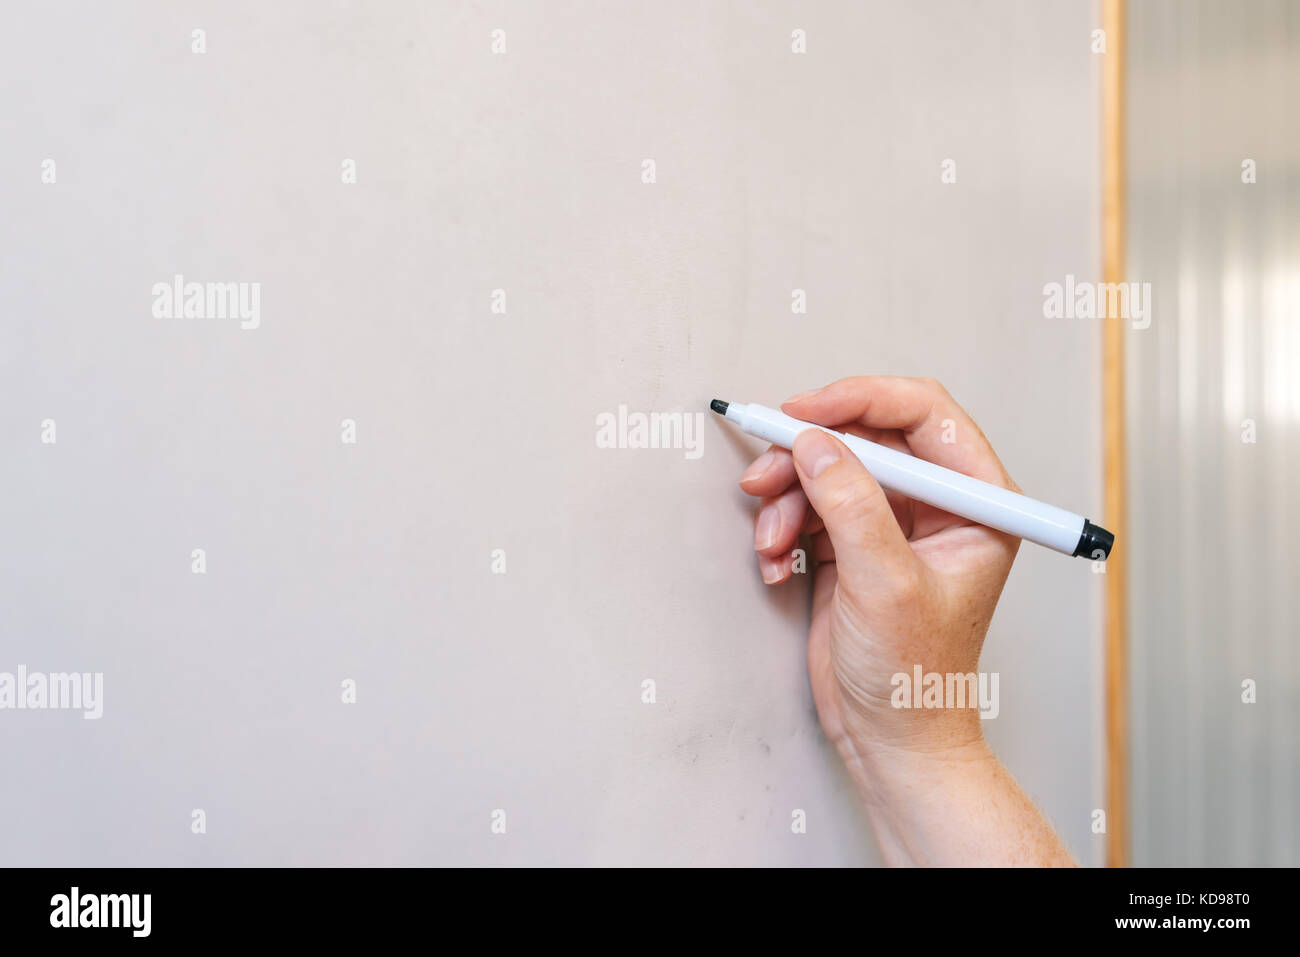 Female hand writing on whiteboard with felt tip pen Stock Photo